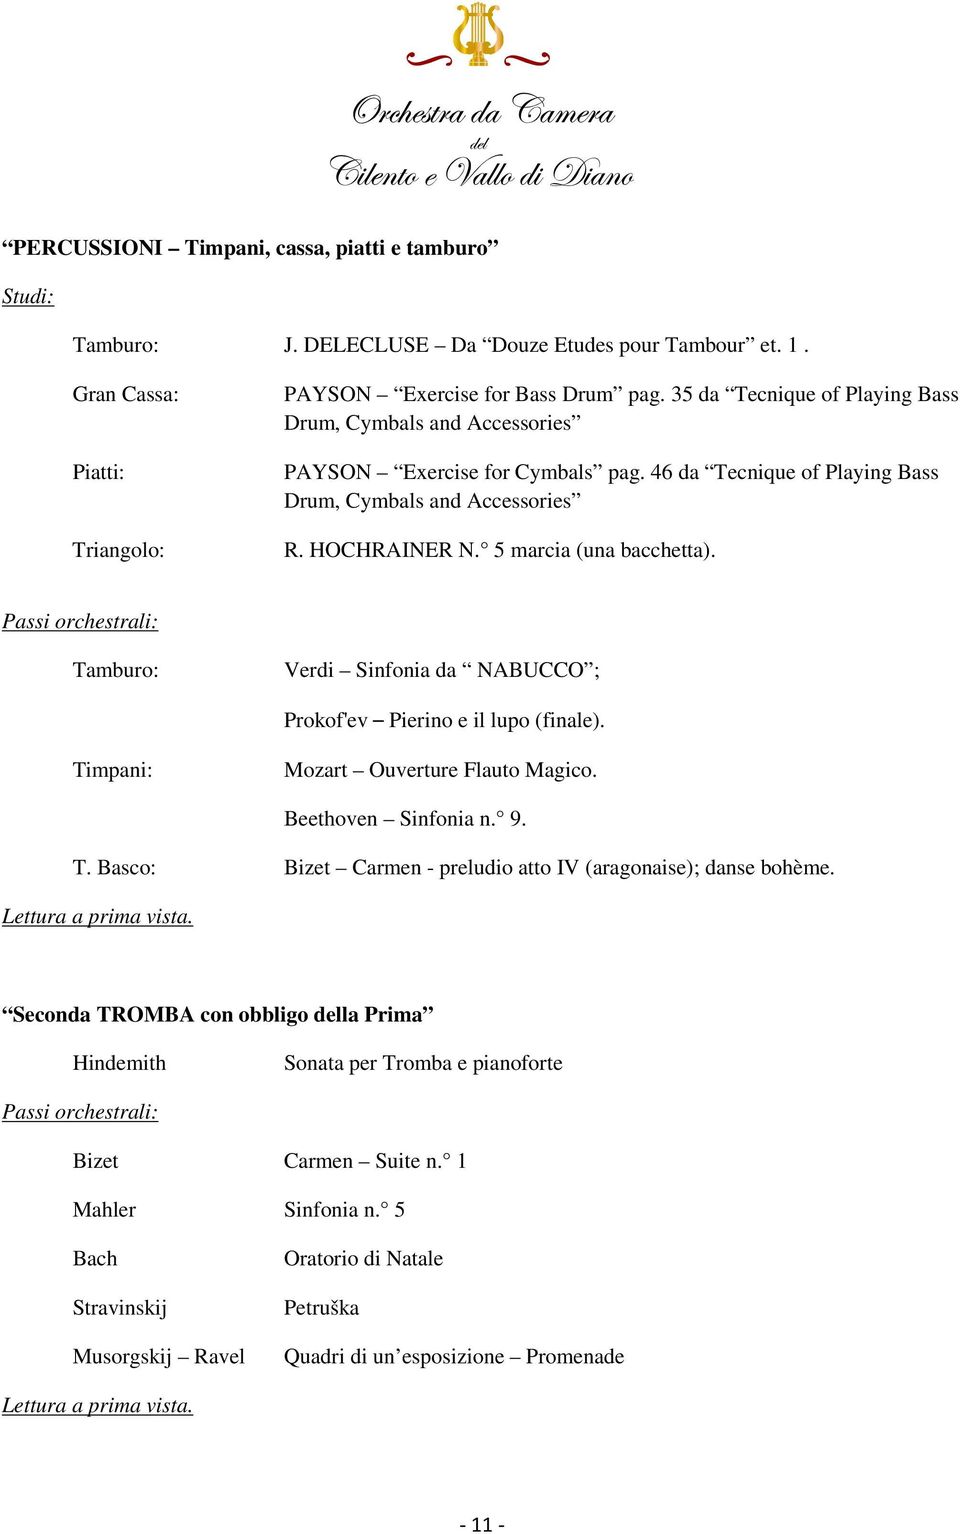 Tamburo: Verdi Sinfonia da NABUCCO ; Prokof'ev Pierino e il lupo (finale). Timpani: Mozart Ouverture Flauto Magico. Beethoven Sinfonia n. 9. T. Basco: Bizet Carmen - preludio atto IV (aragonaise); danse bohème.